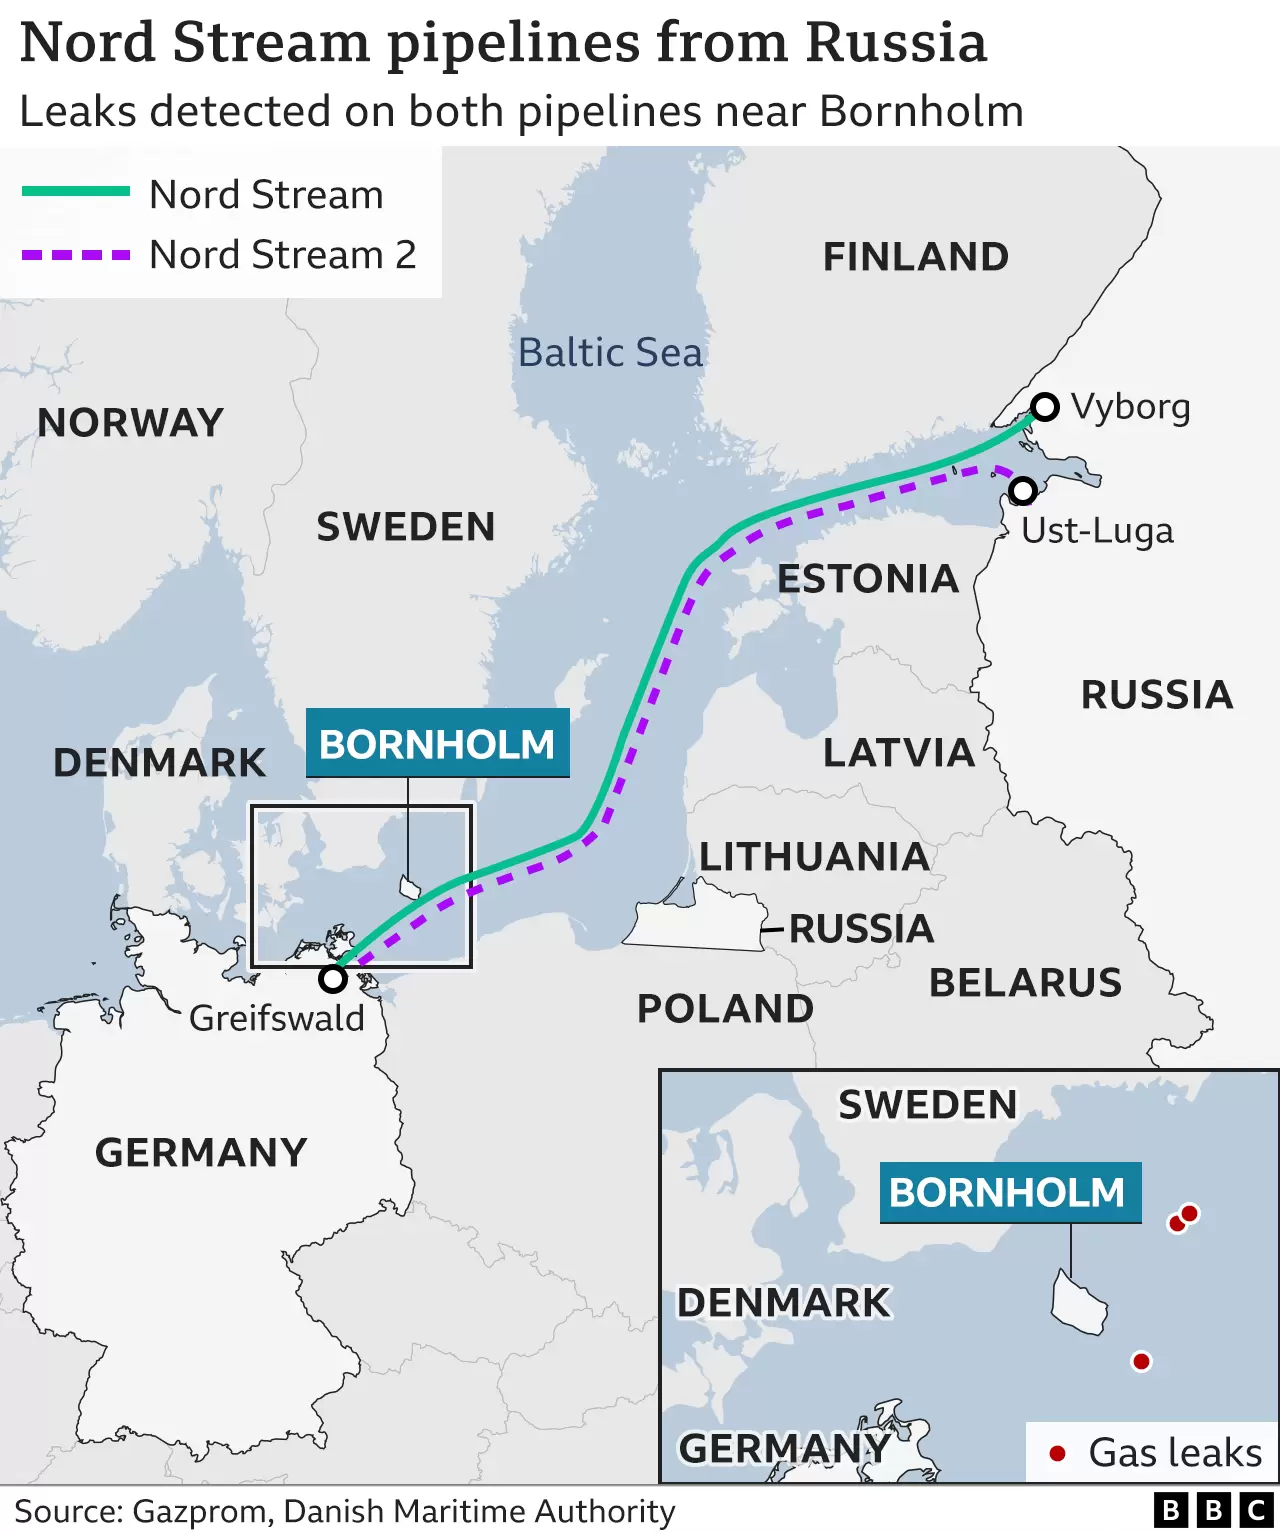 Tiga Paip Gas Bawah Laut Rusia Bocor Dipercayai "Sabotaj"